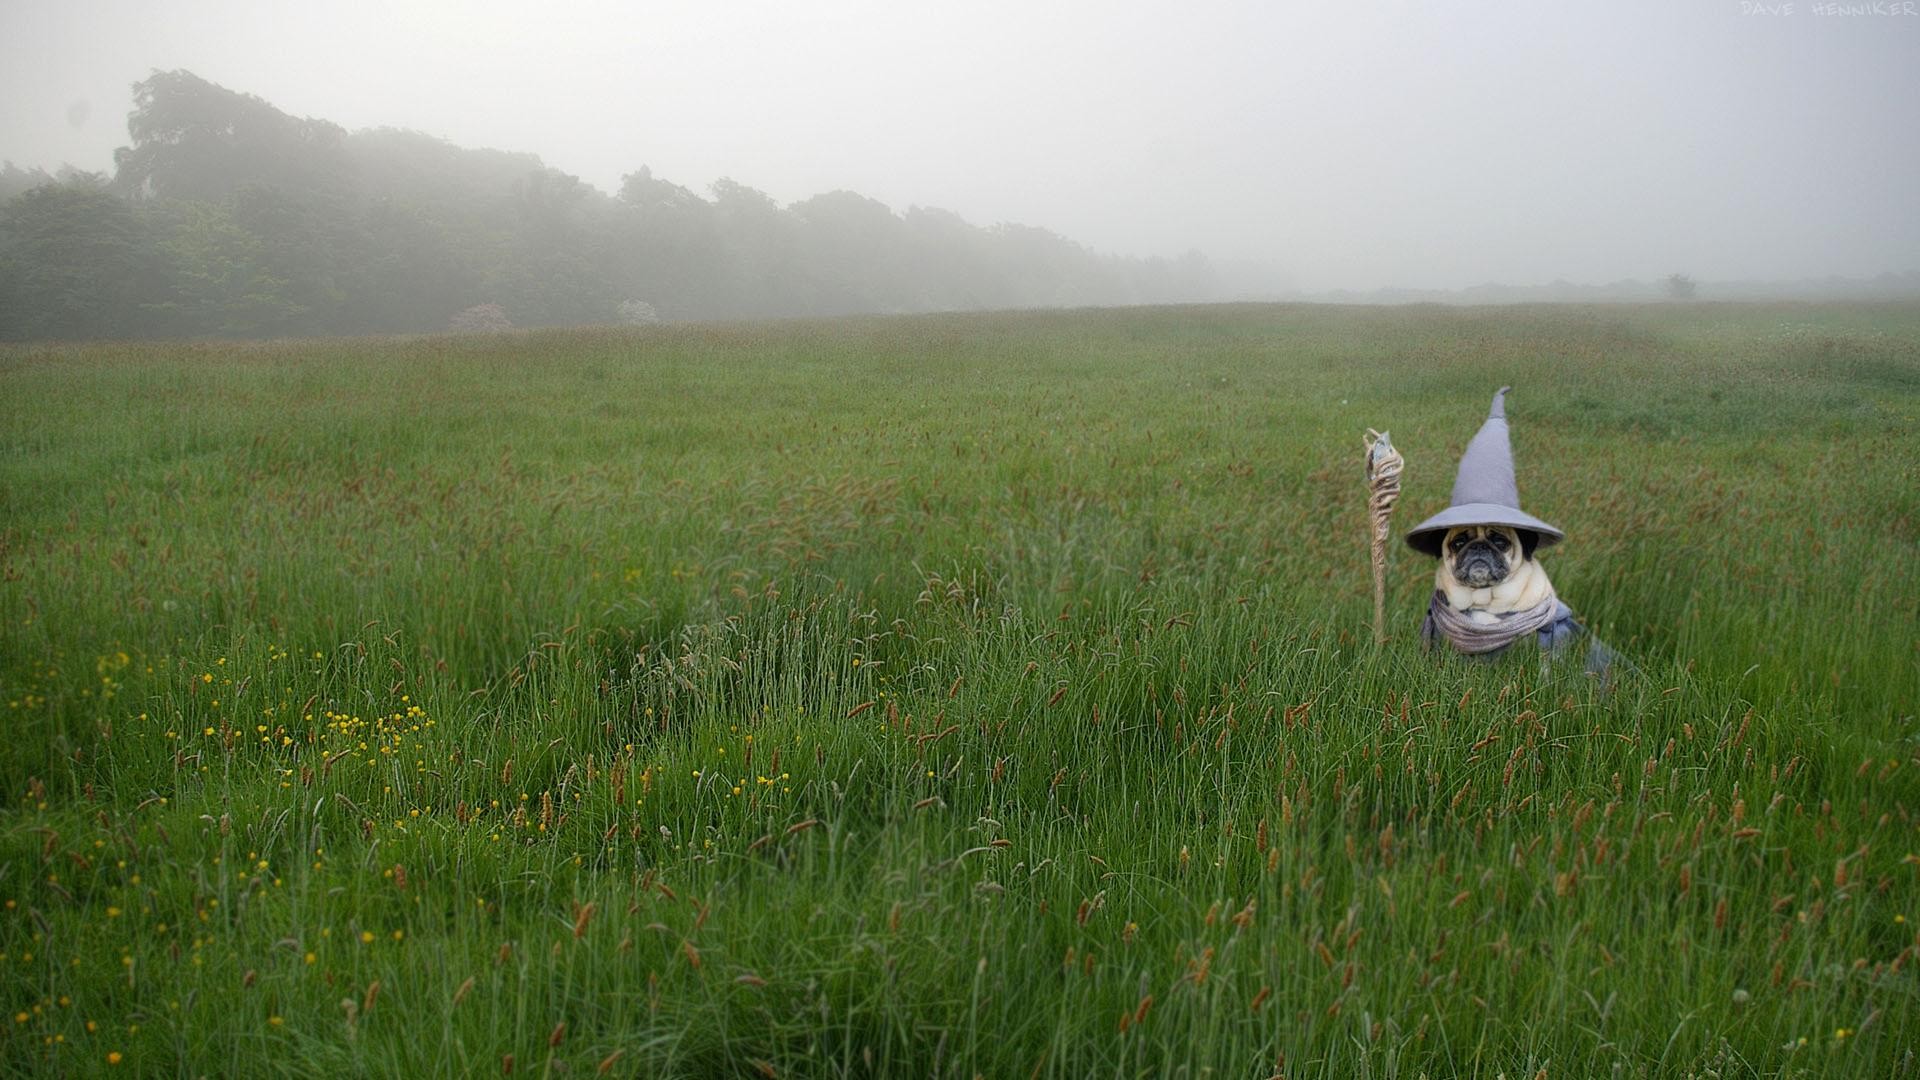 General 1920x1080 Gandalf humor dog field mist pug  grass